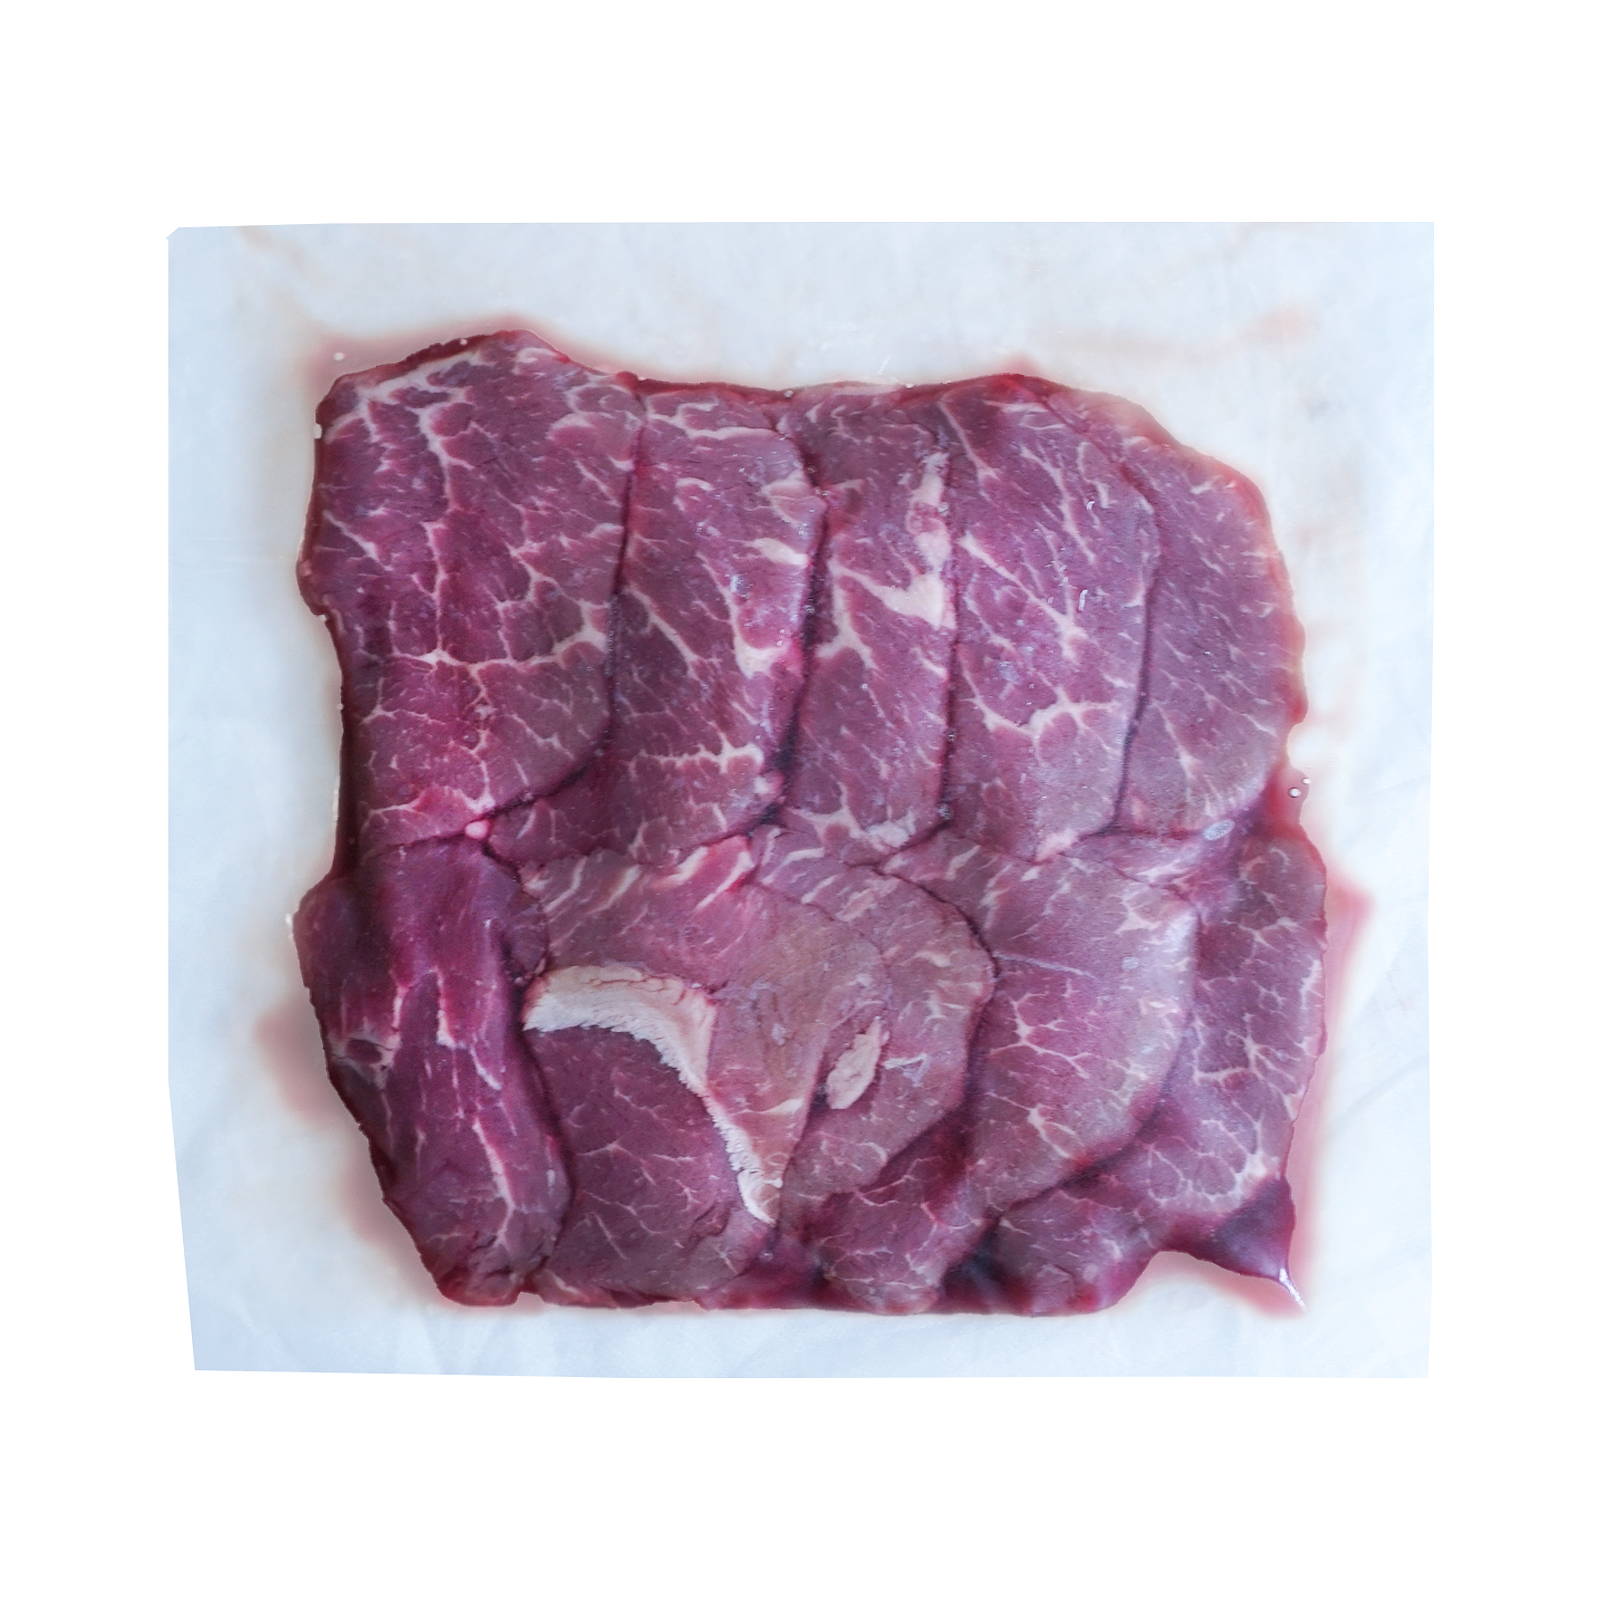 Premium Grain-Fed Beef MB5+ Filet BBQ Slices from Australia (200g) - Horizon Farms